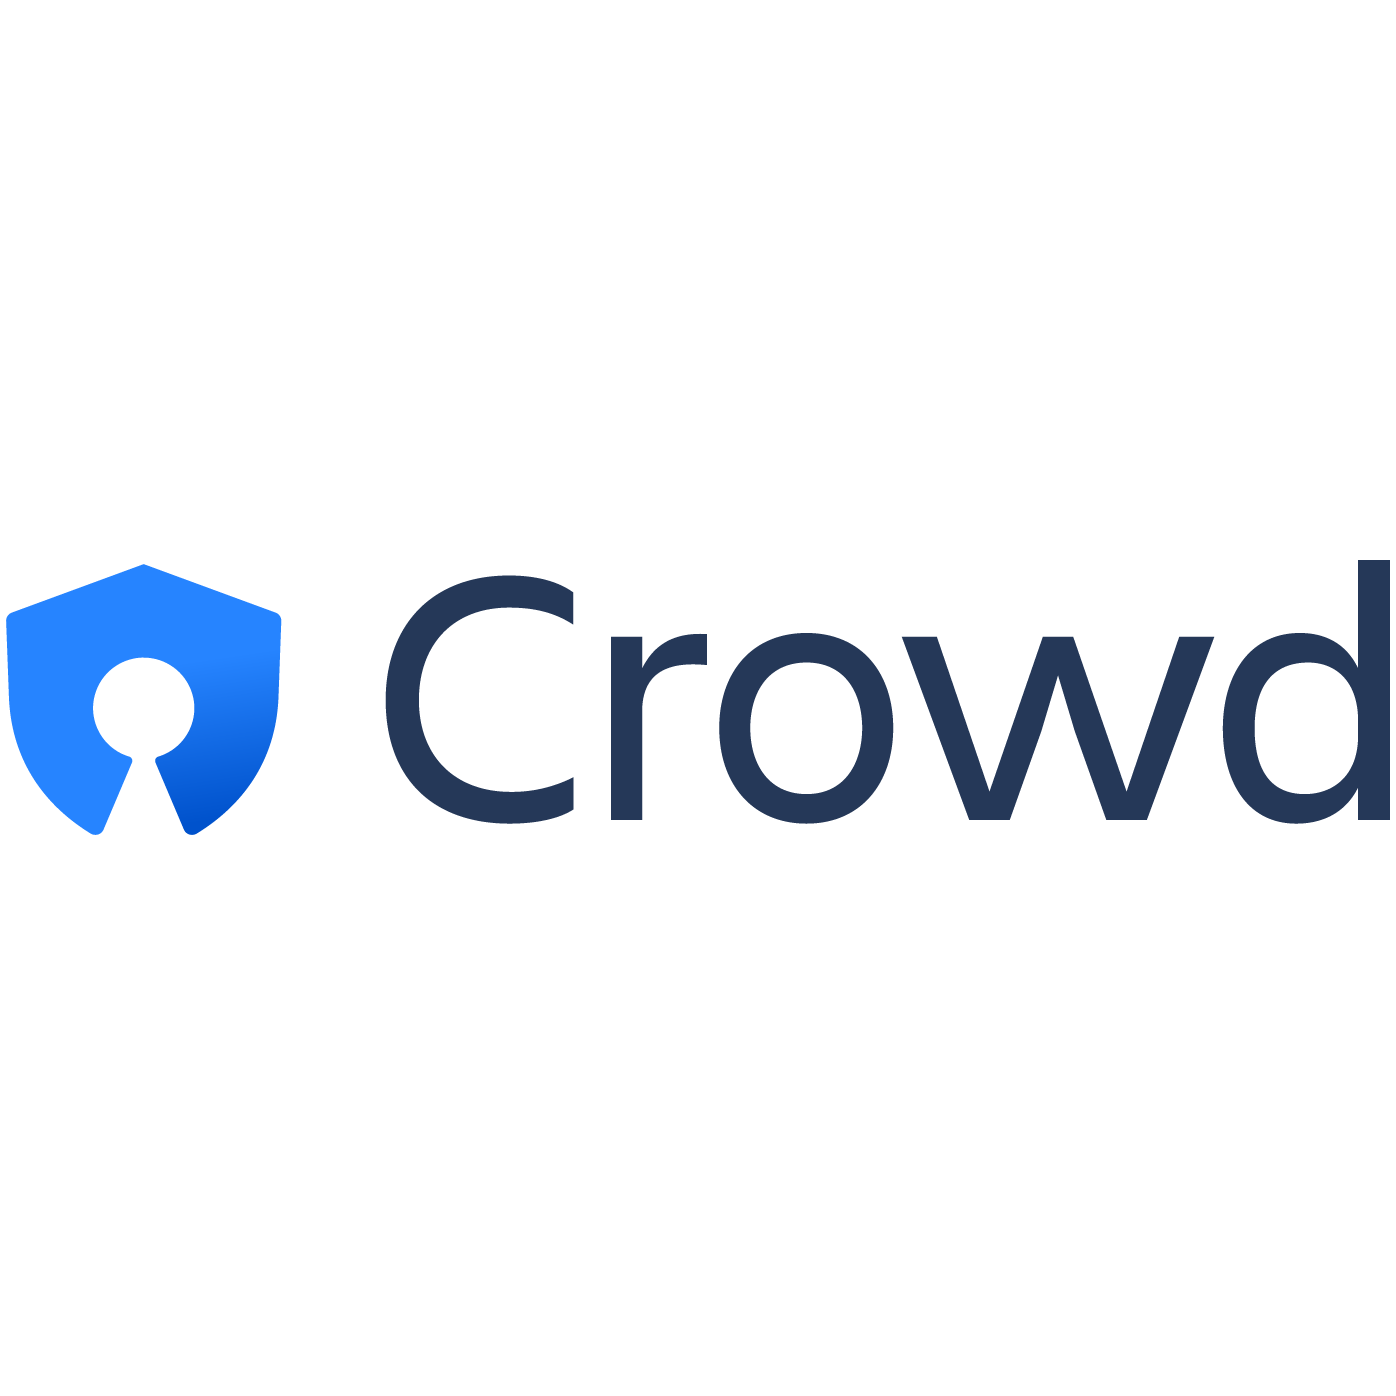 Crowd – Single Sign On mit dem Atlassian Tool for Devs